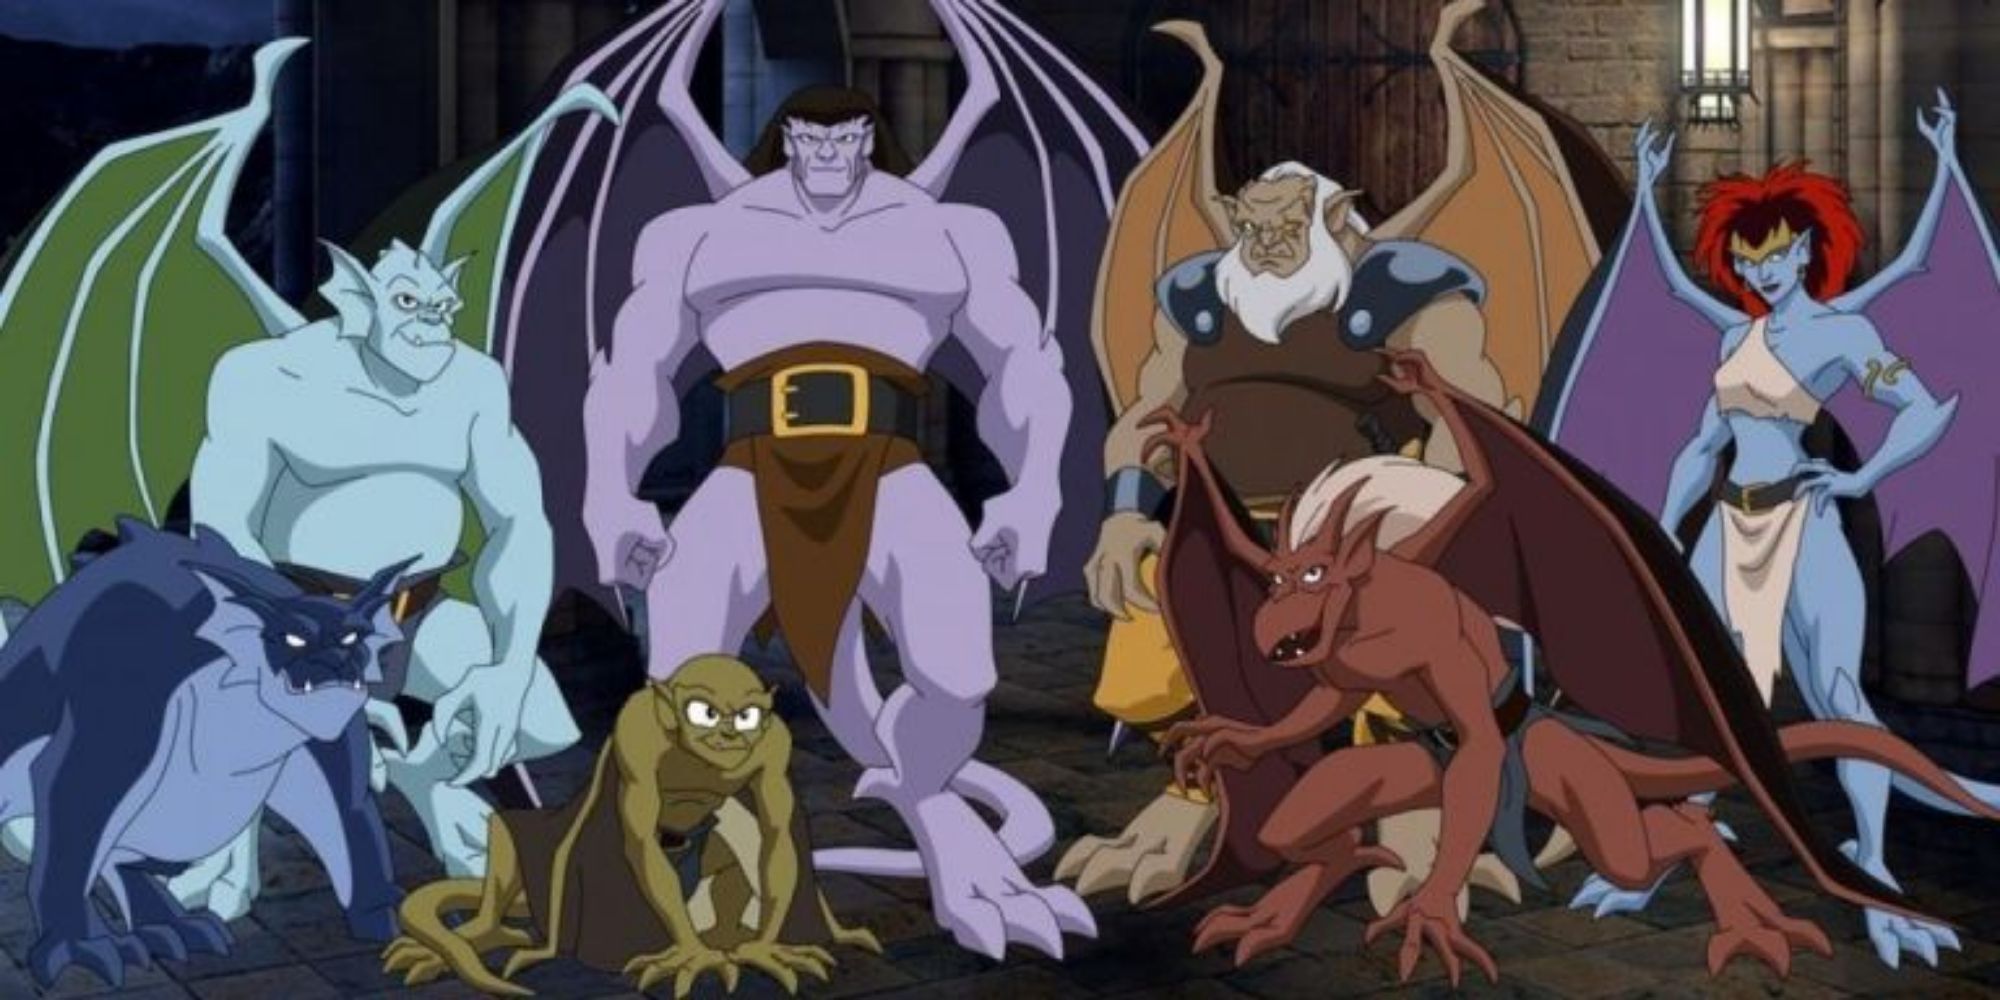 Disney's Gargoyles